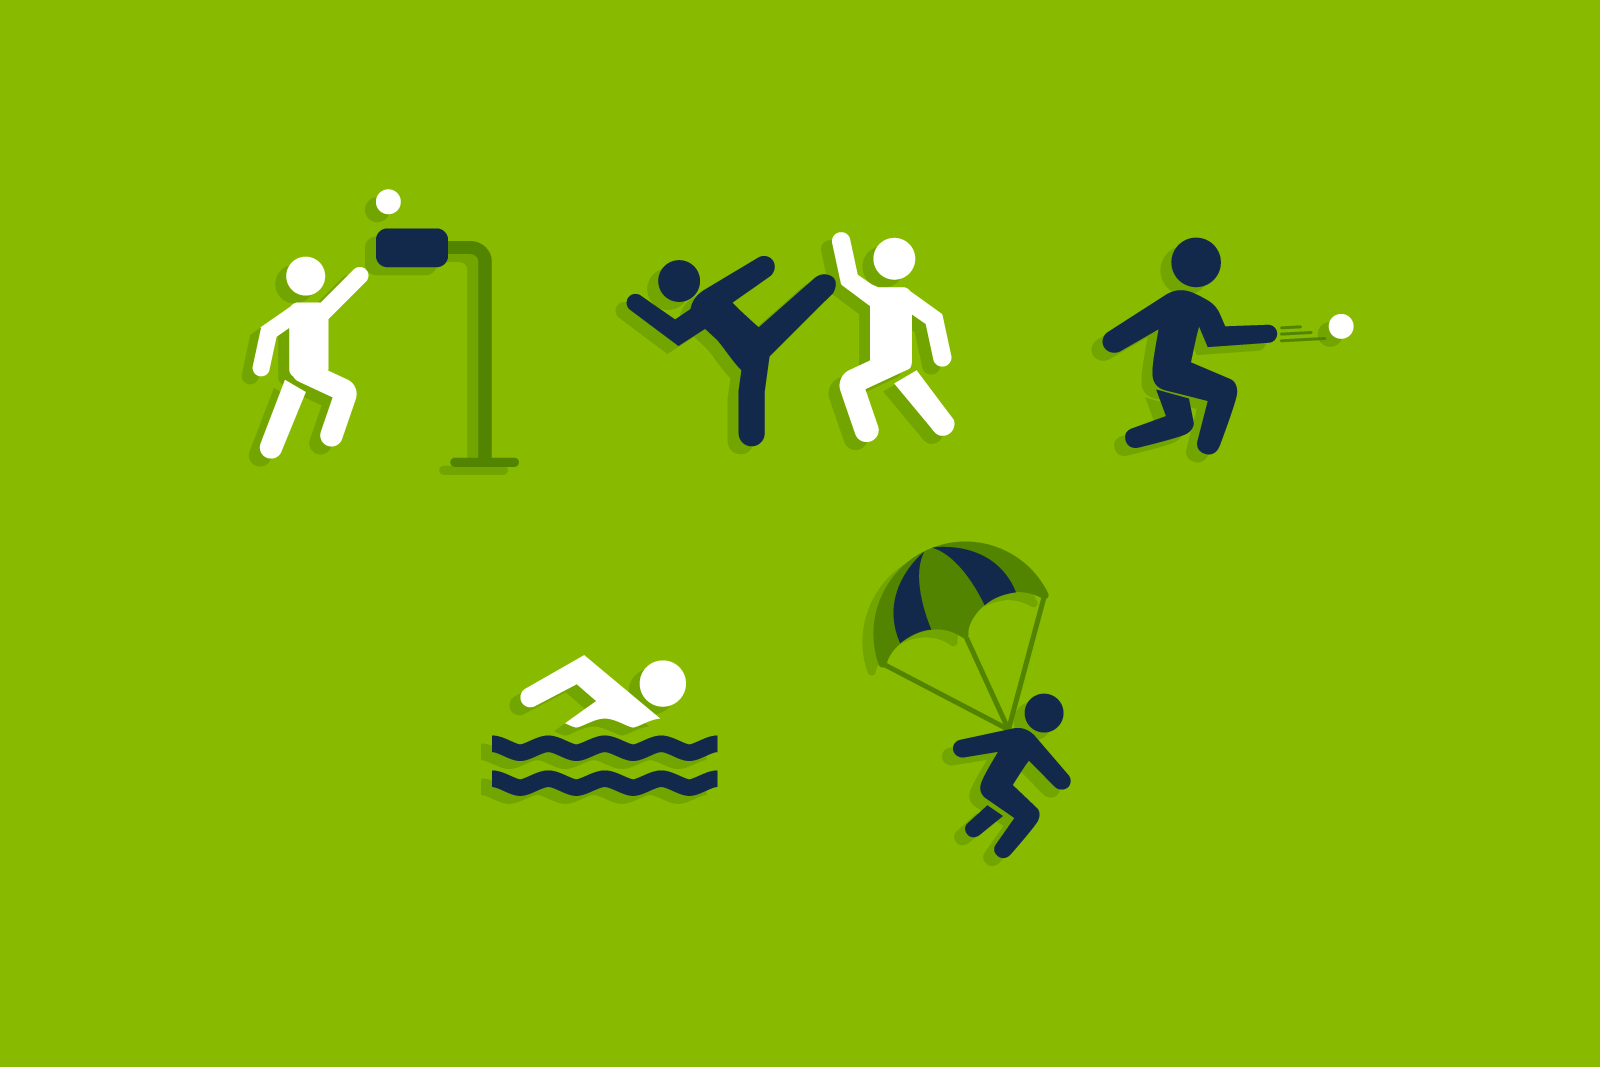 icons for, Korfball, Muaythai, Lyonnaise, Lifesaving, and Canopy Piloting